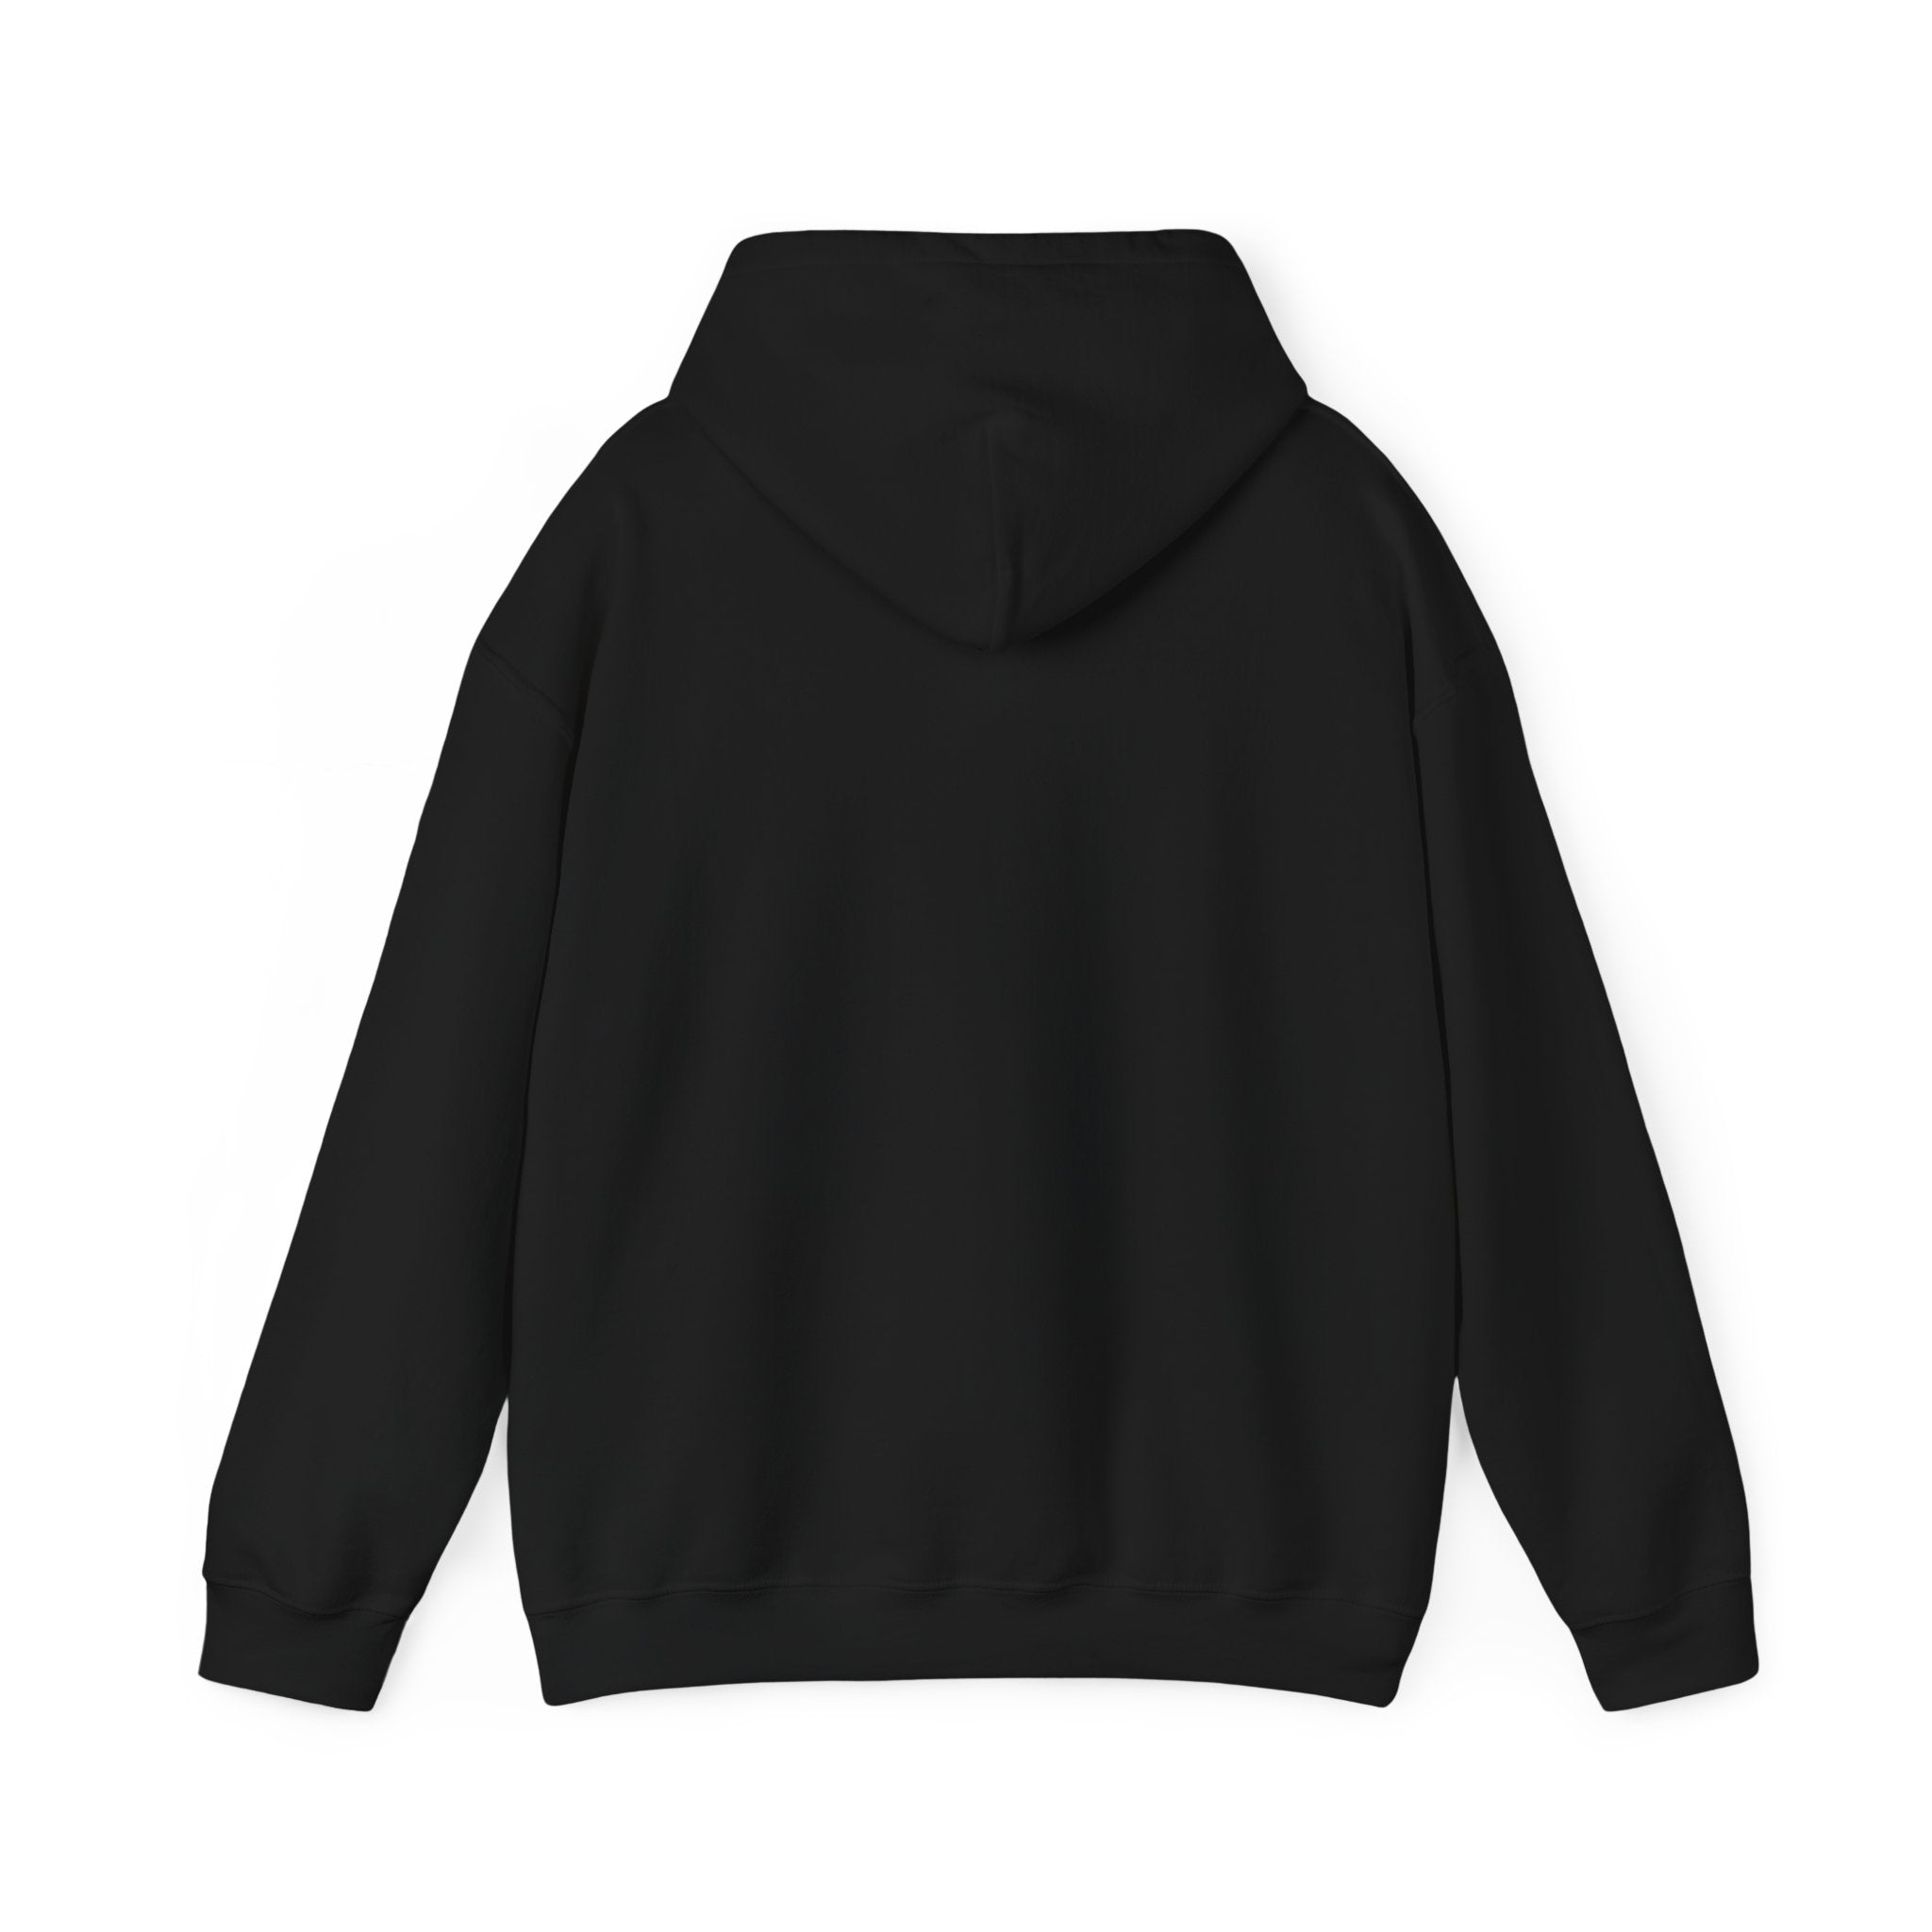 BT Academy Unisex Heavy Blend™ Hooded Sweatshirt